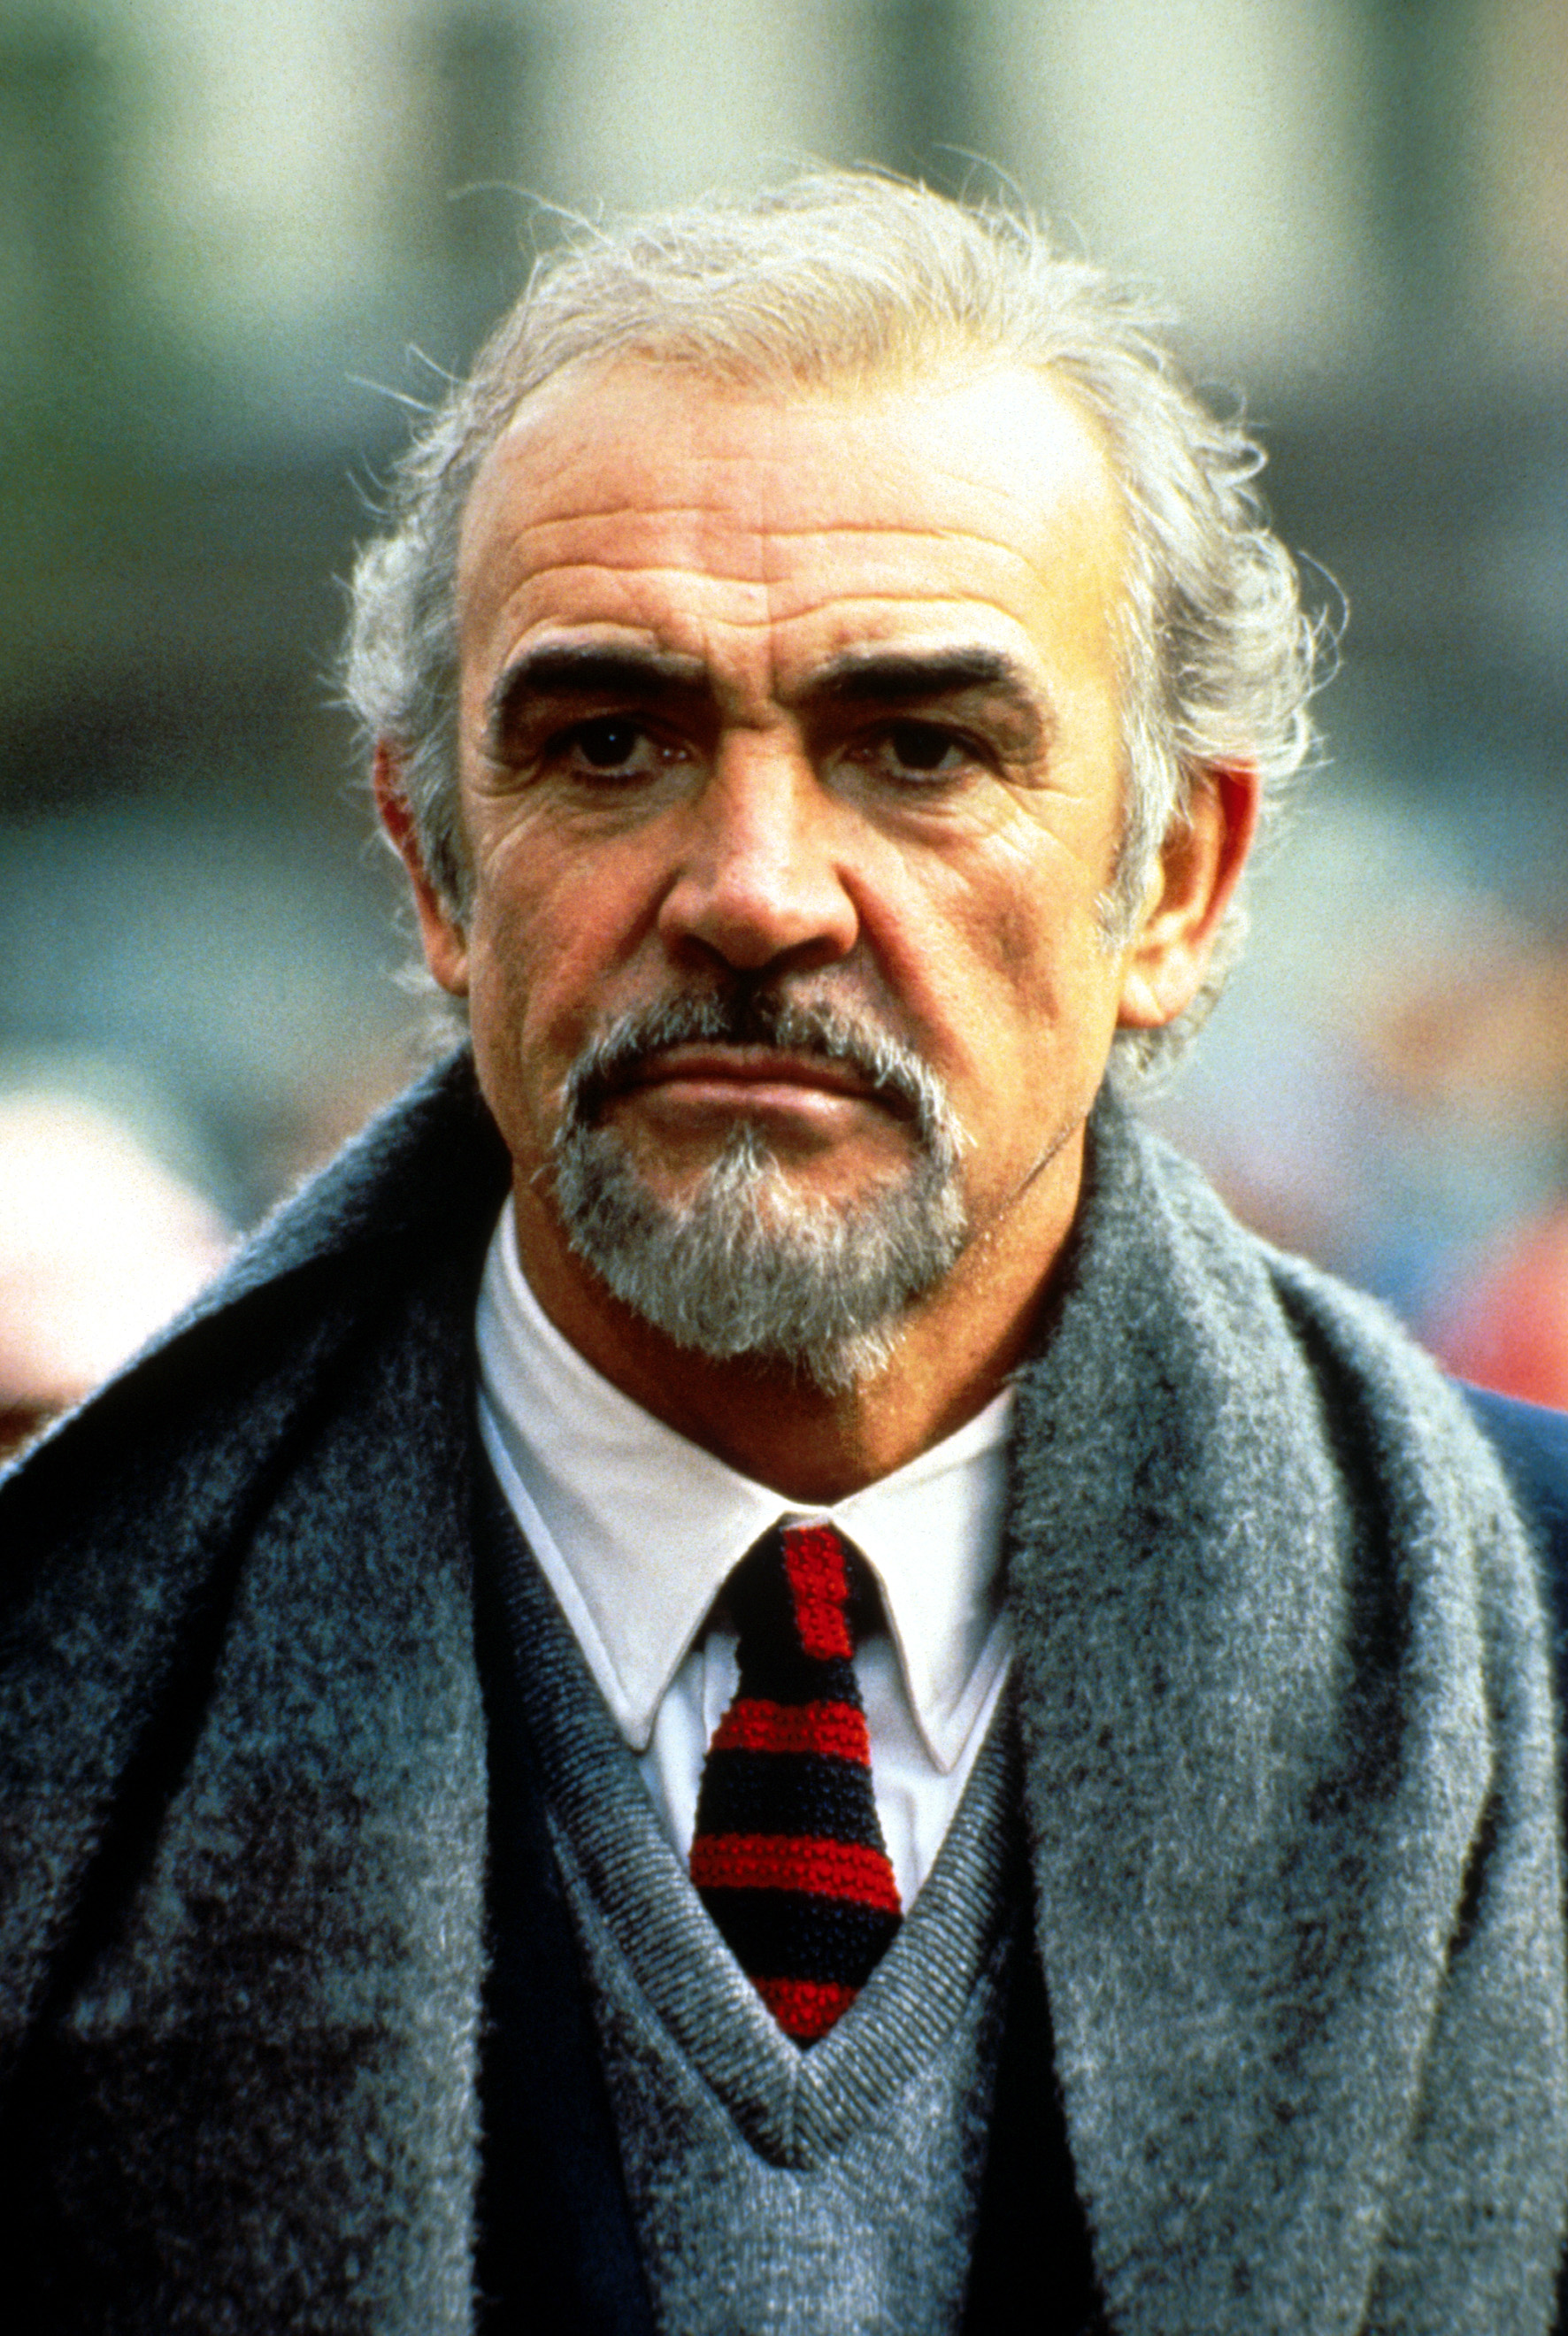 Sean Connery as Bartholomew "Barley" Scott Blair in The Russia House, 1990.